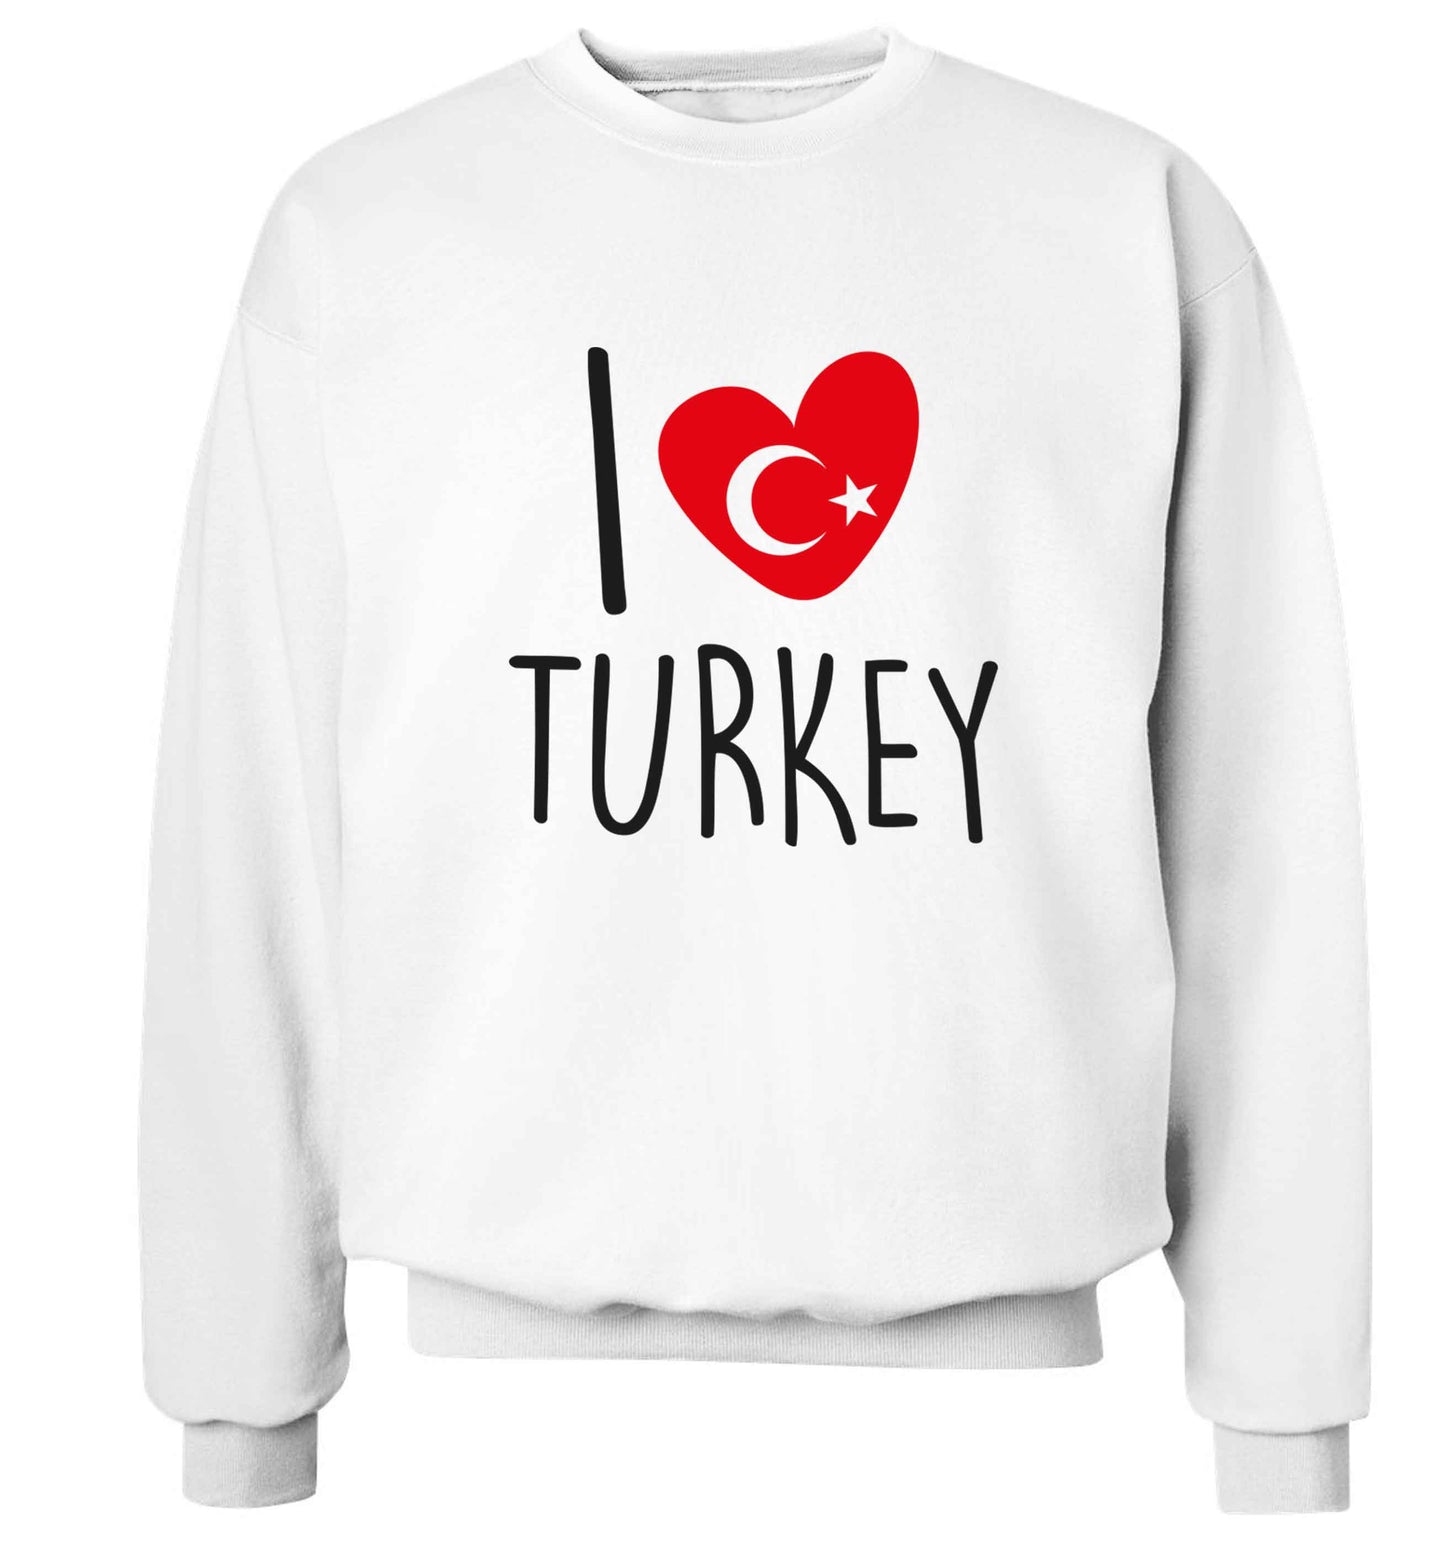 I love Turkey Adult's unisex white Sweater 2XL